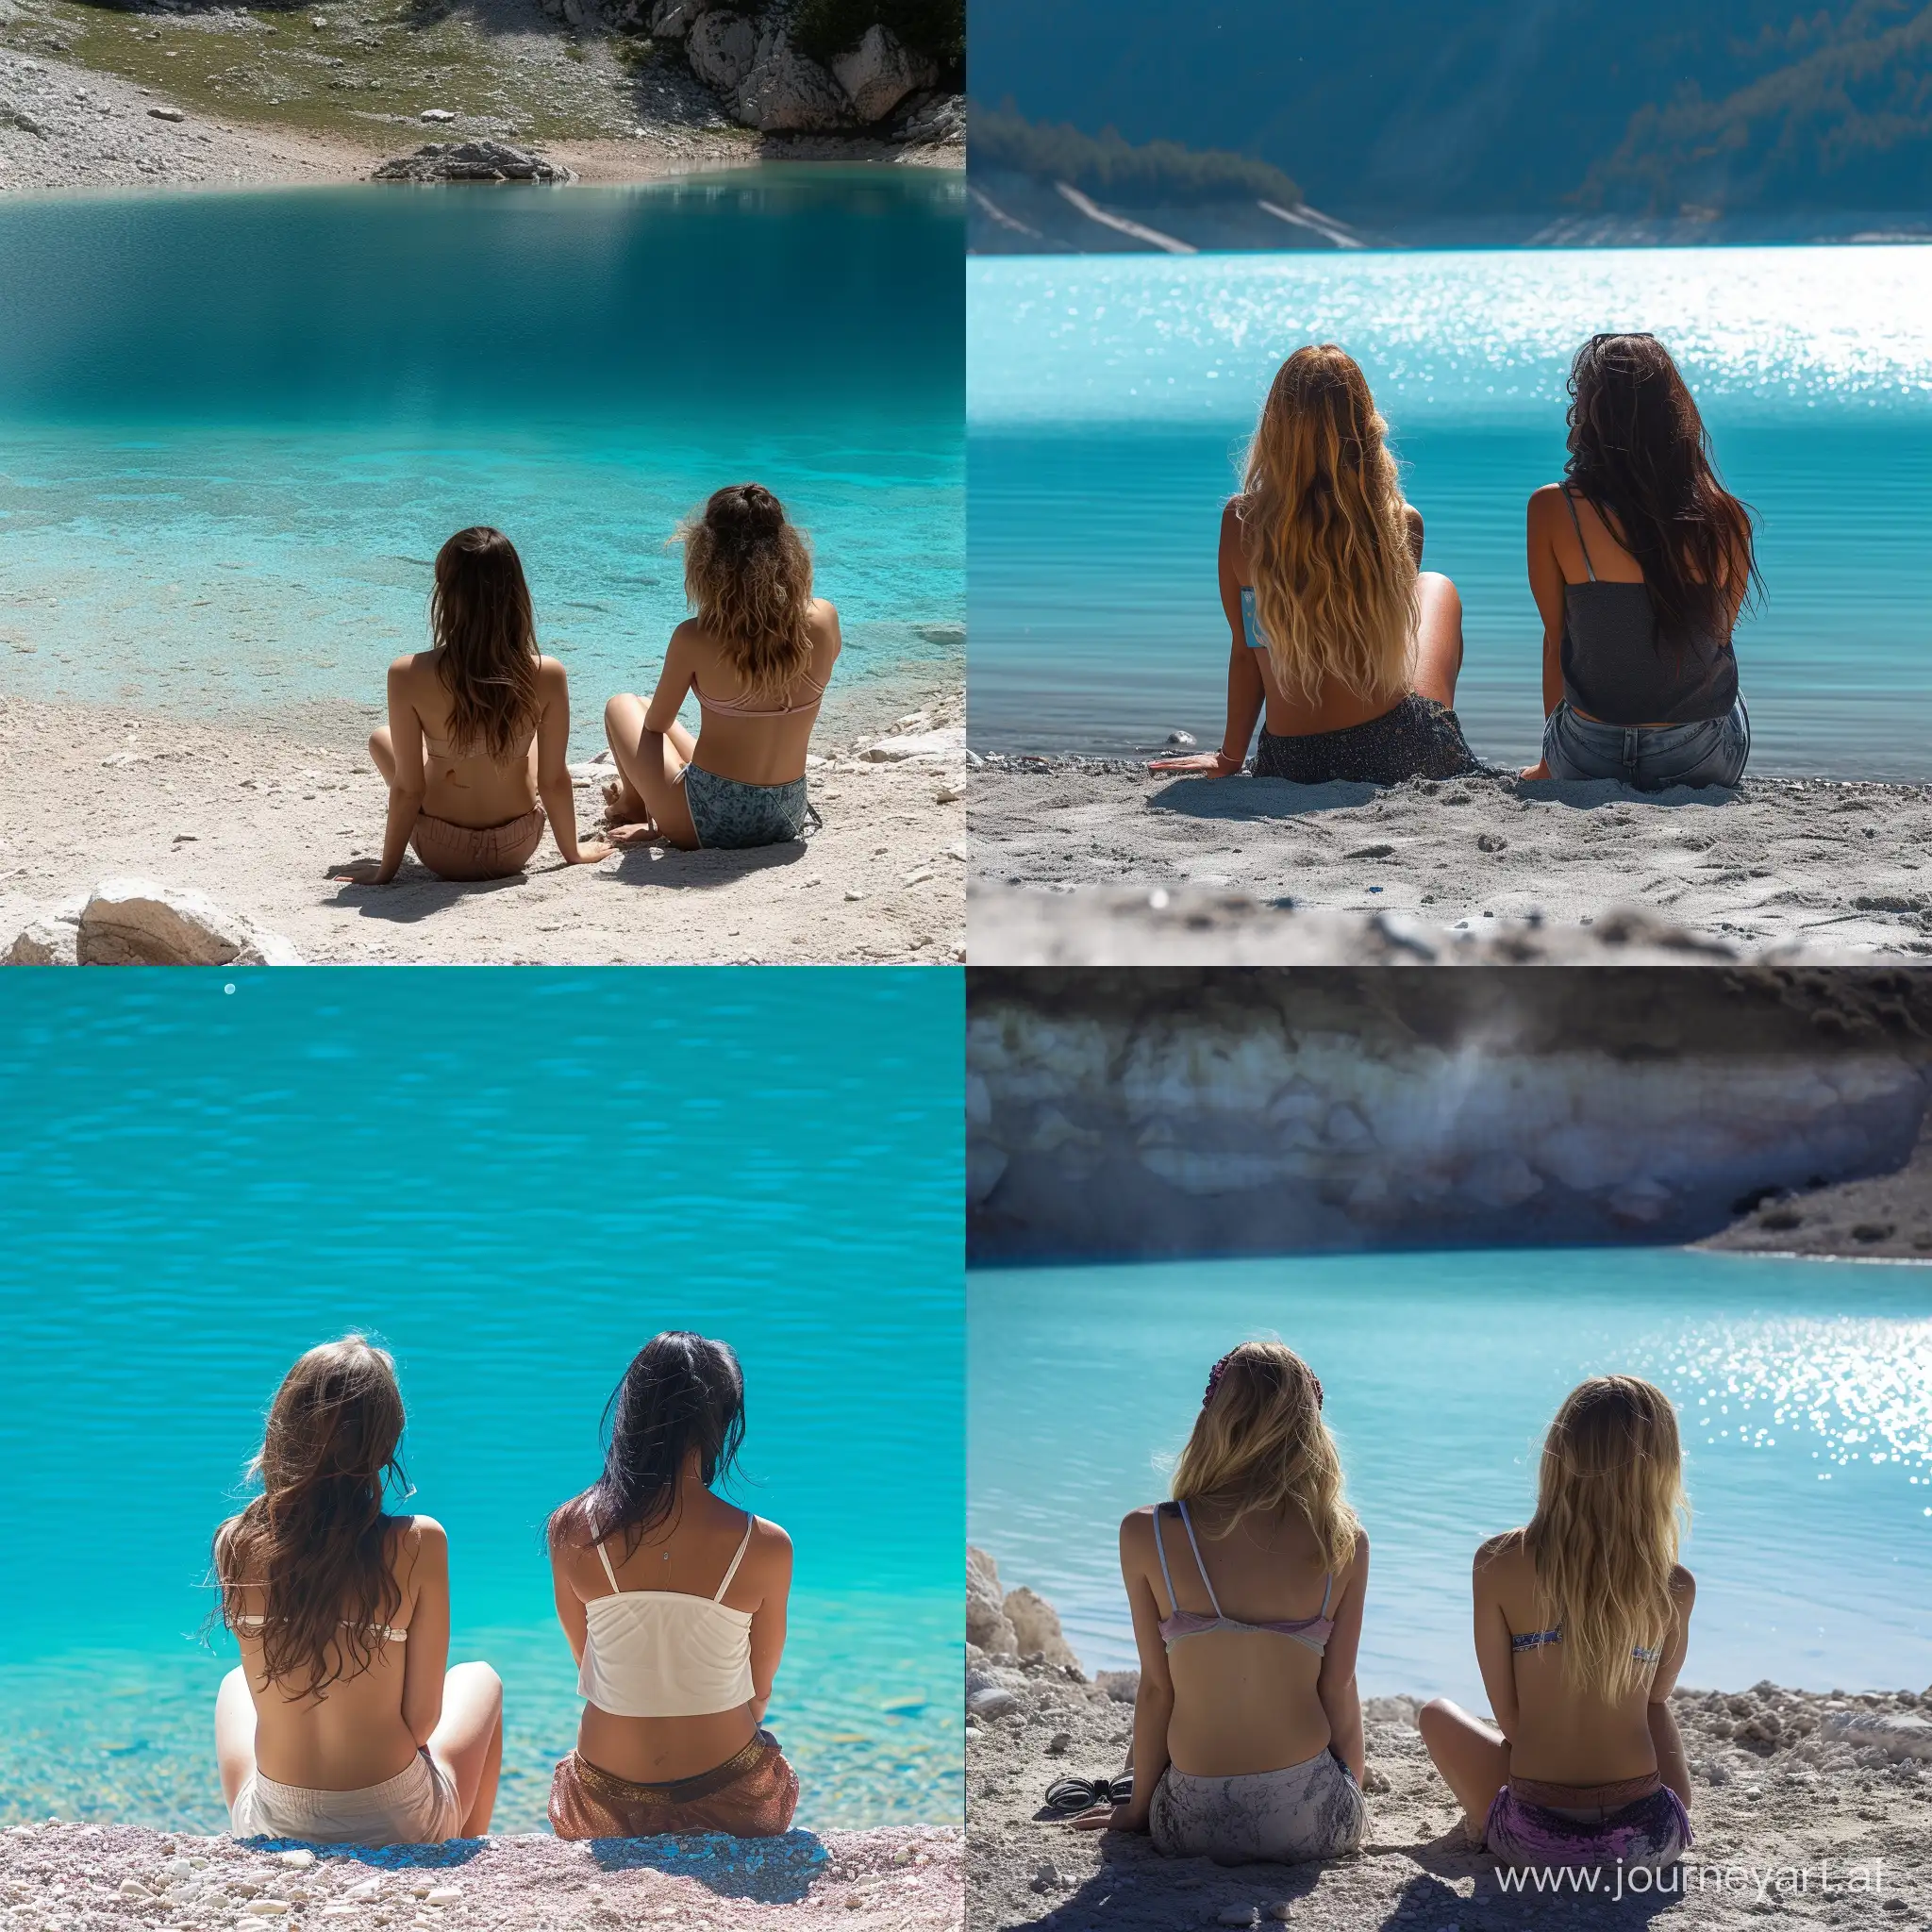 Serene-Lakeside-Reflection-Two-Girls-Enjoying-Tranquility-by-the-Blue-Lake